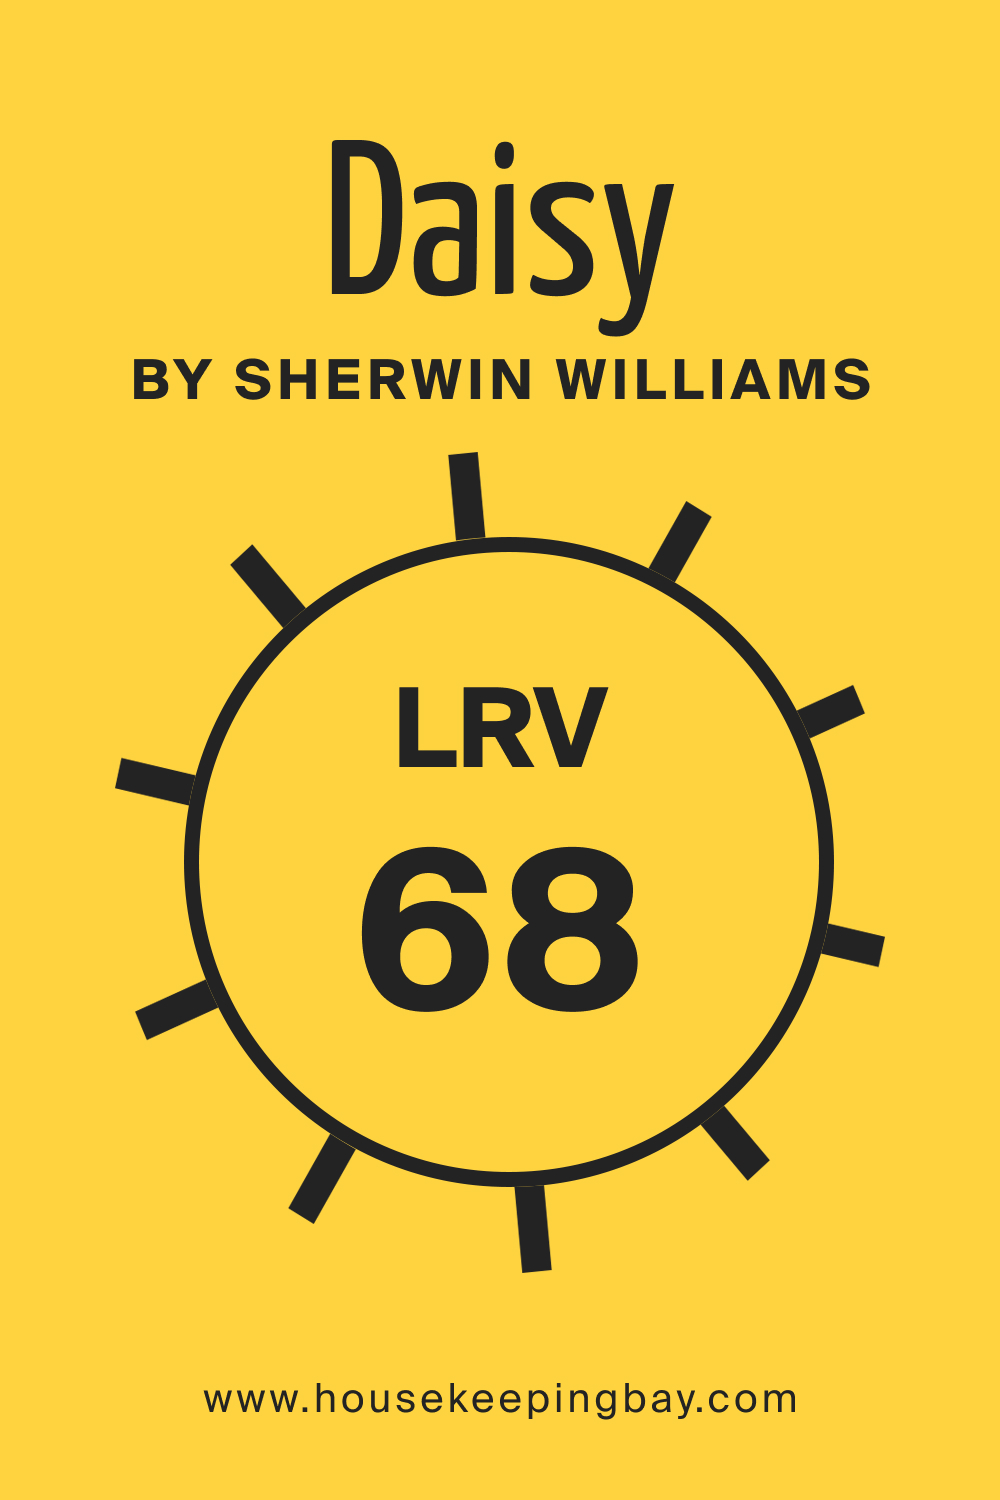 Daisy SW 6910 by Sherwin Williams. LRV 68